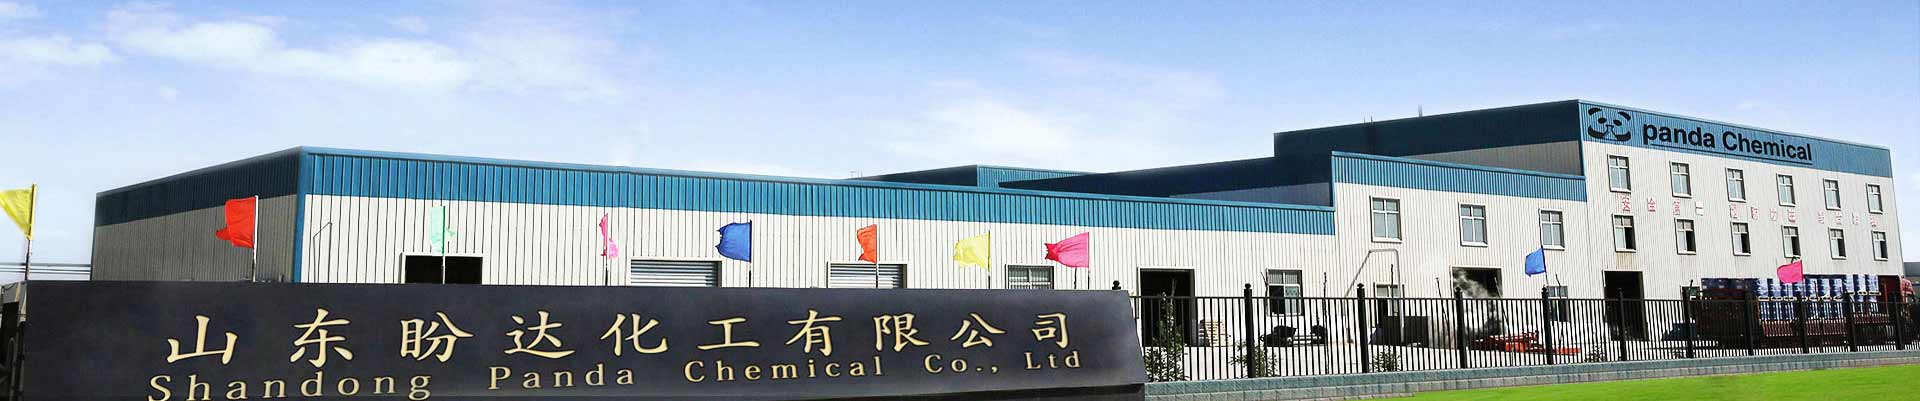 Shandong Panda Chemical Co., Ltd.